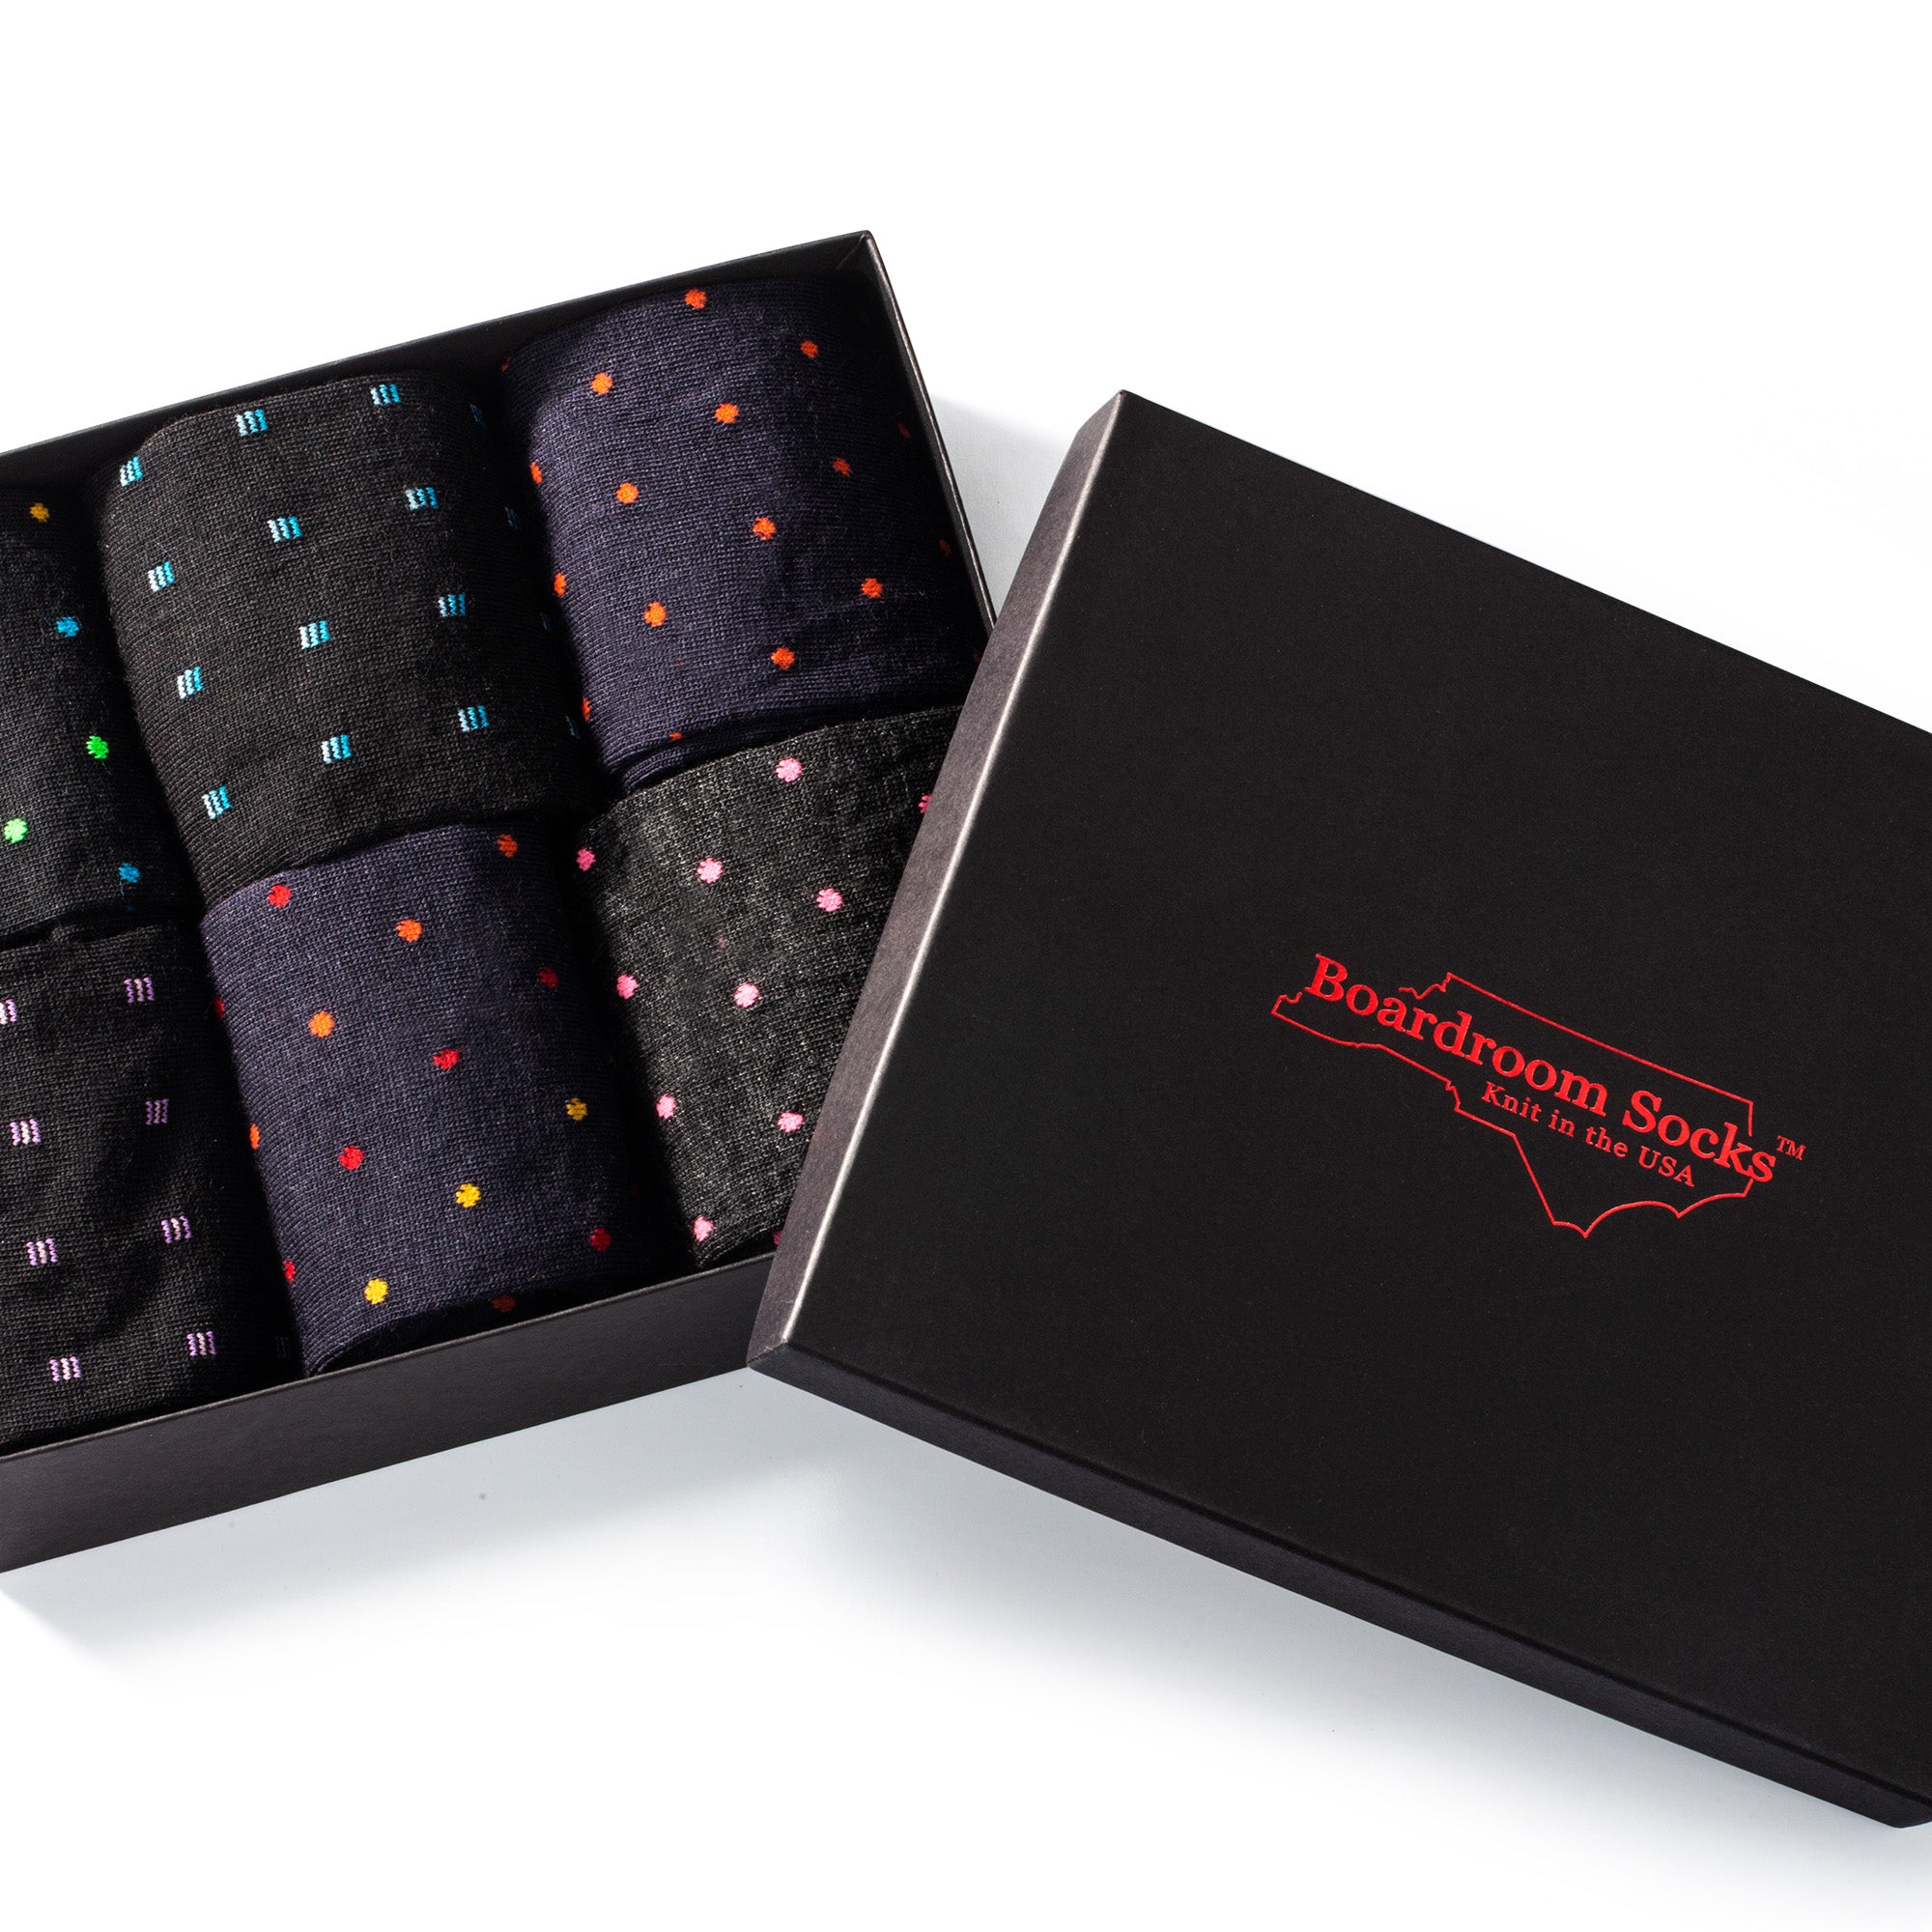 opened Boardroom Socks gift box showing patterned dress socks inside